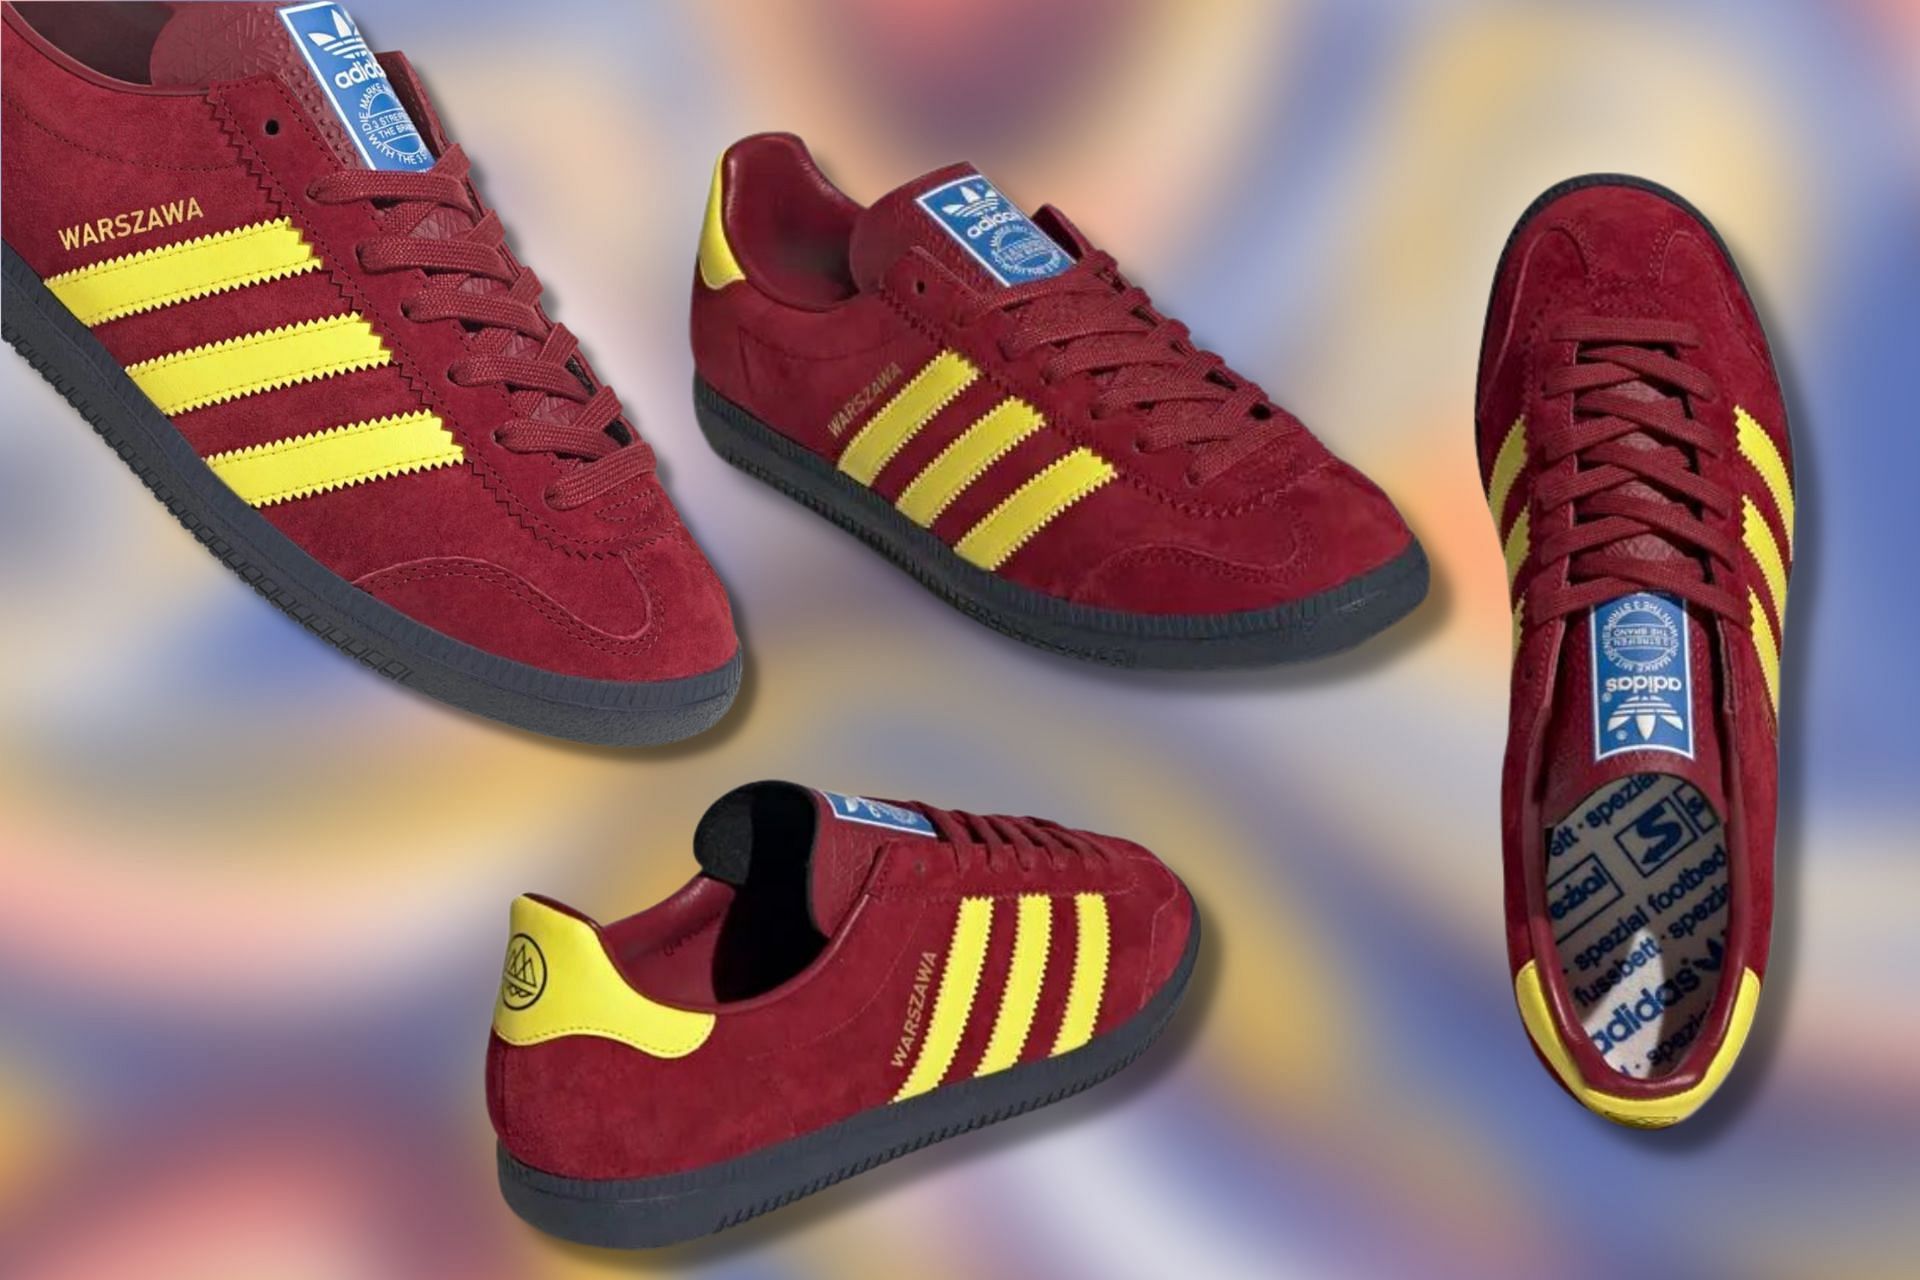 Take a detailed look at the upcoming Adidas SPZL Warszawa sneakers (Image via Sportskeeda)